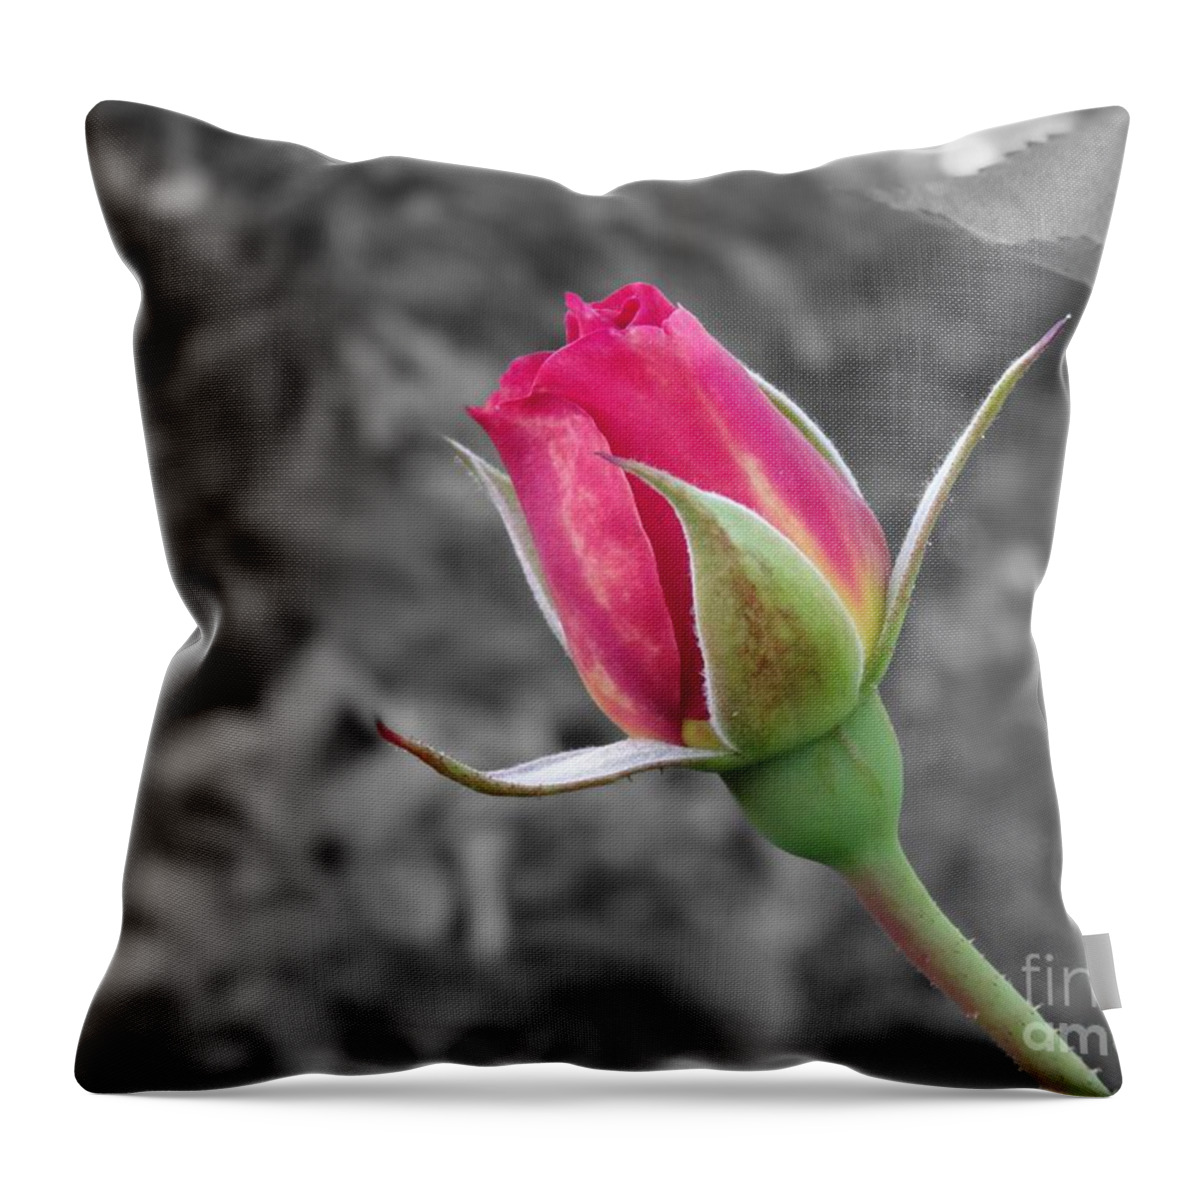 Flower Throw Pillow featuring the photograph Rose #1 by Erik Dunn